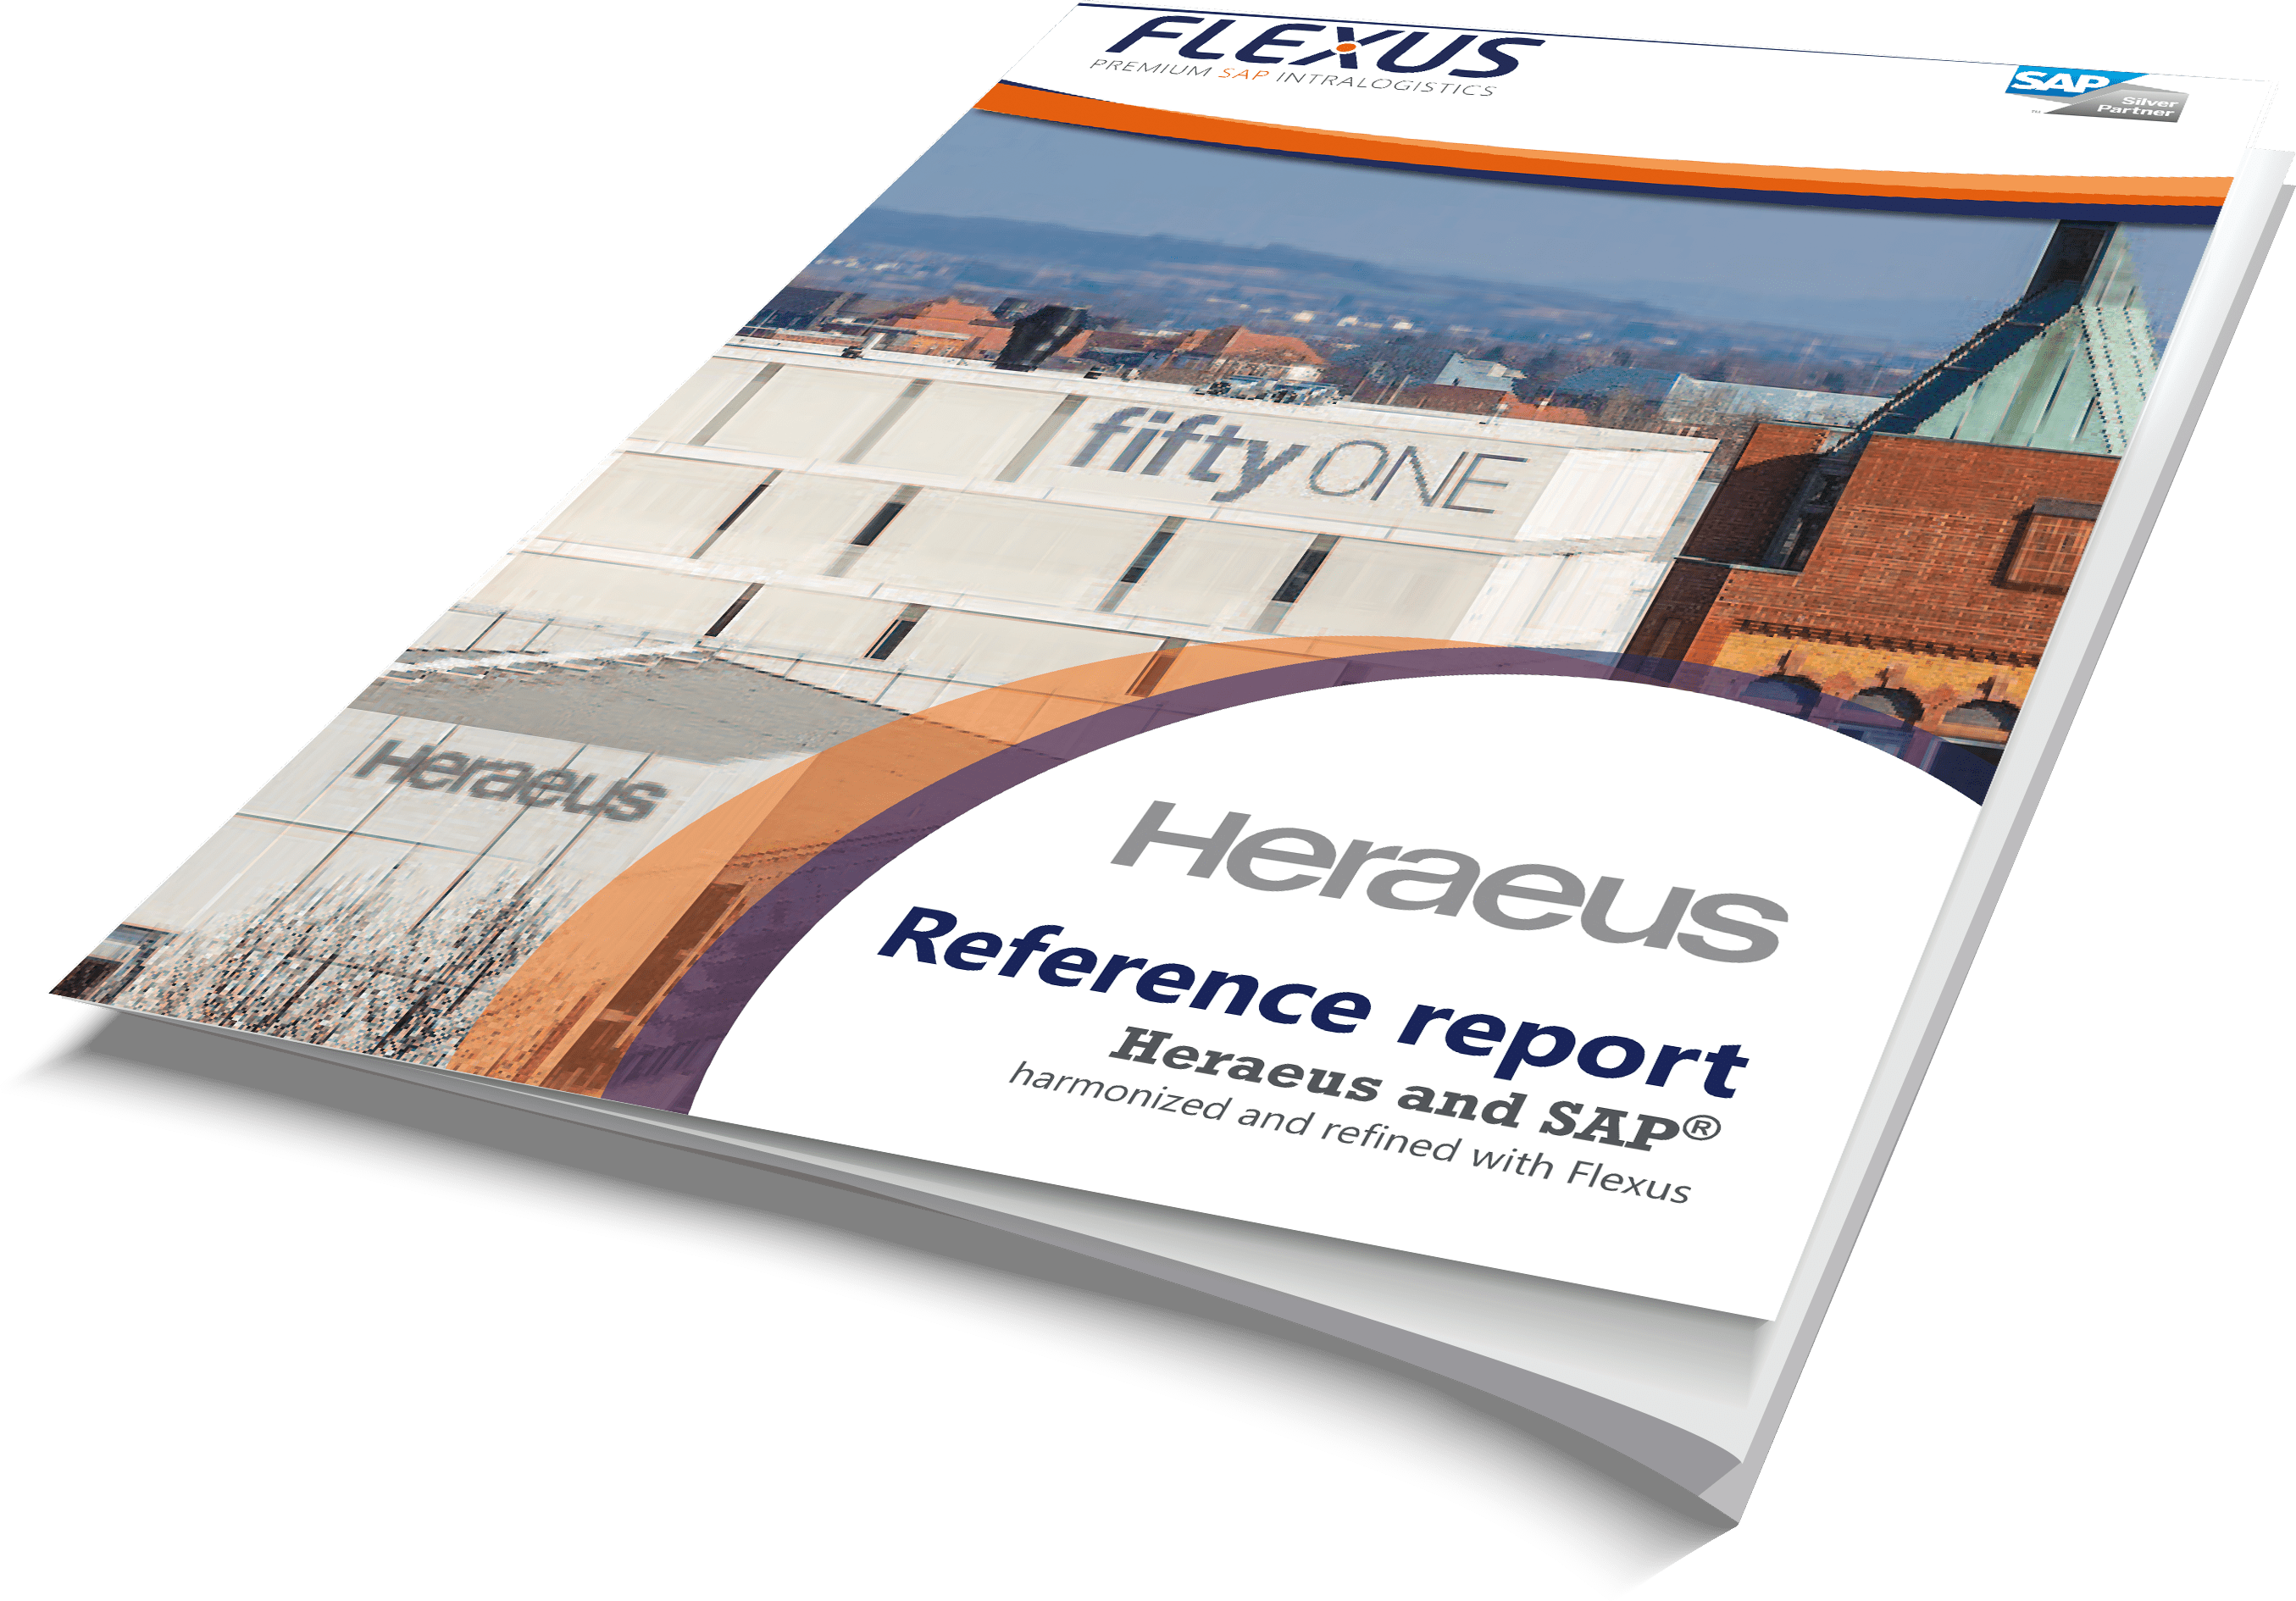 Reference report Heraeus